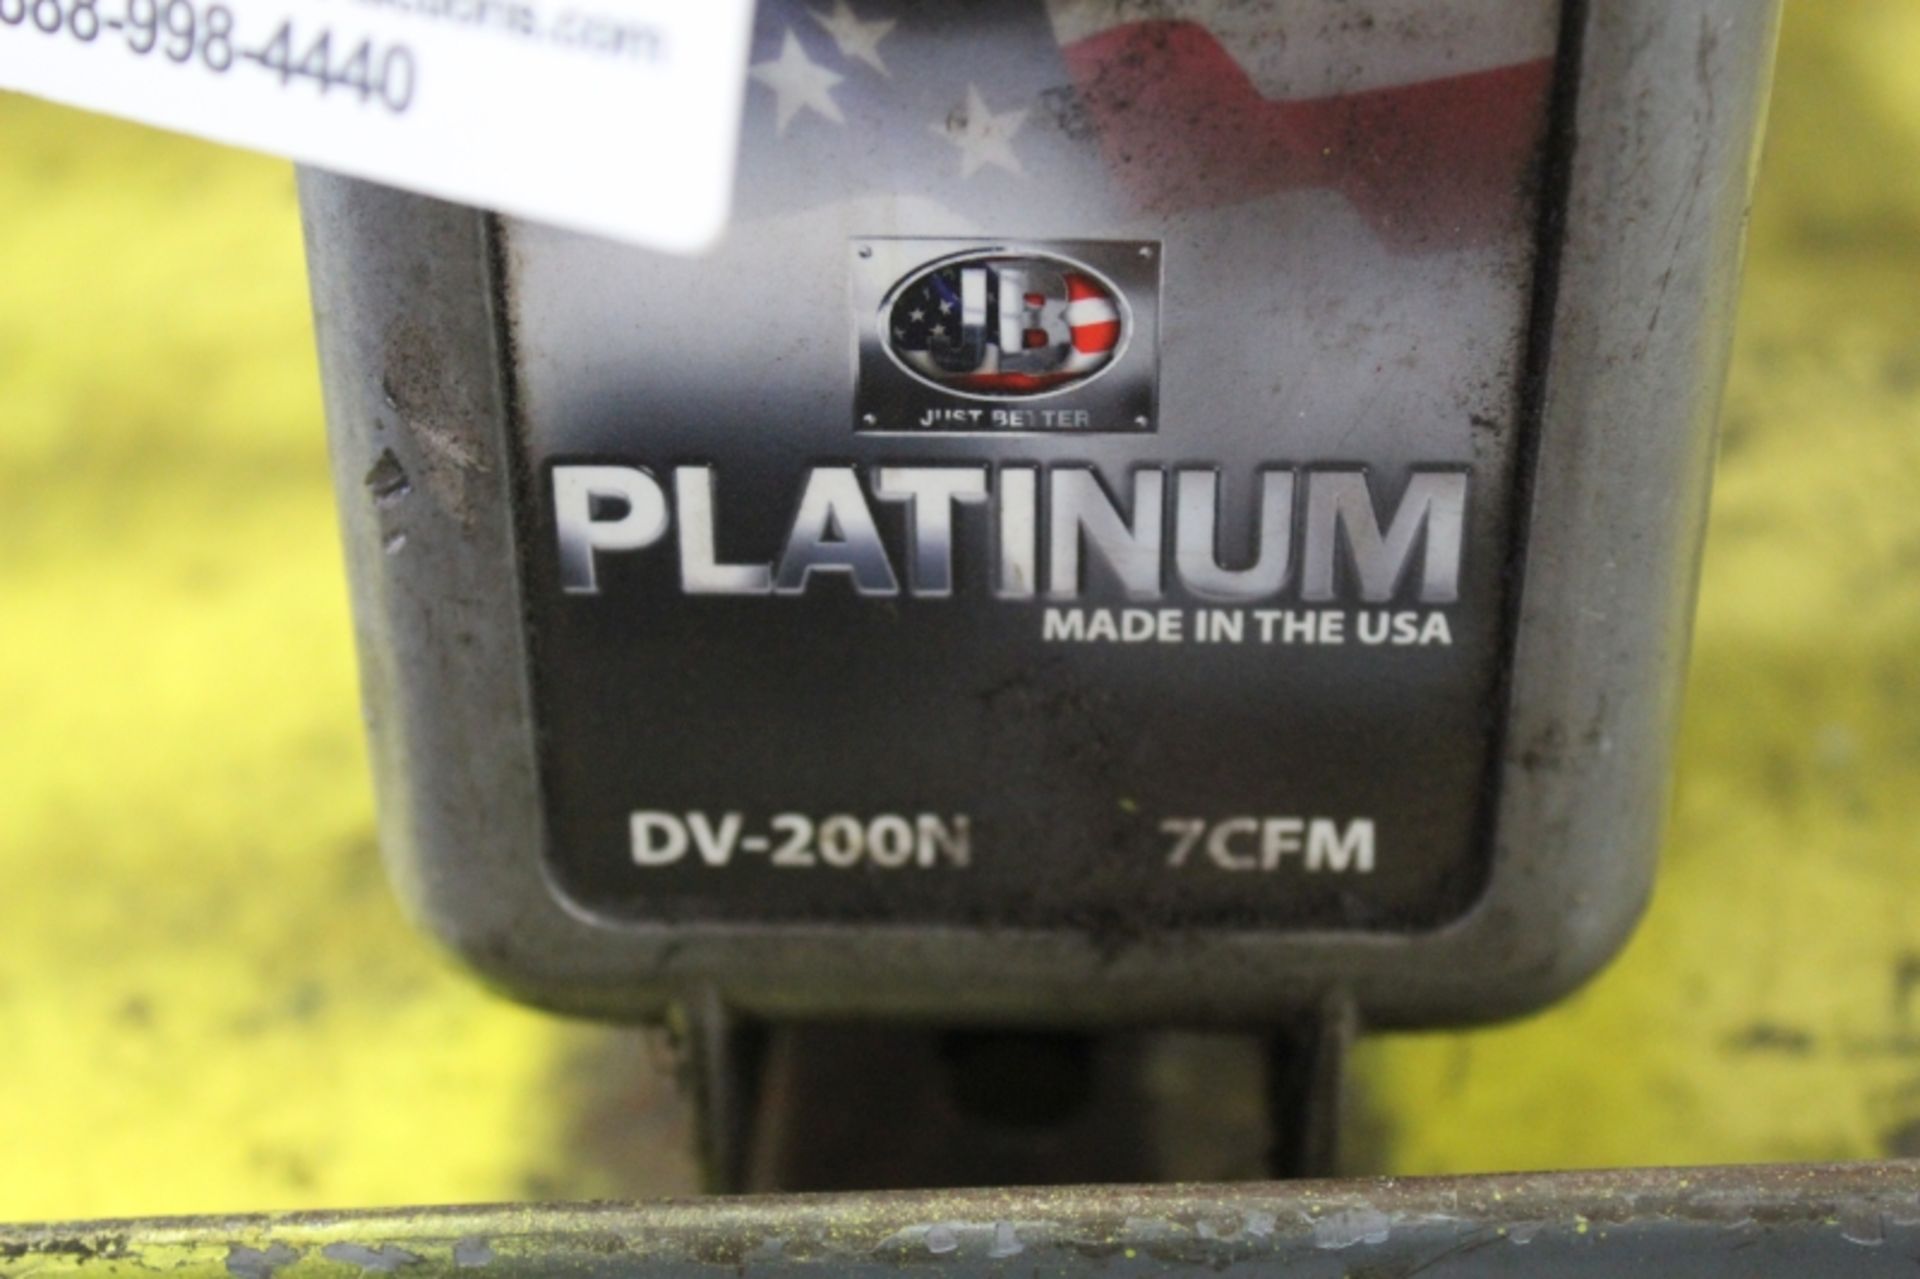 JB Industries DV-200N Platinum Vacuum Pump - Image 3 of 3